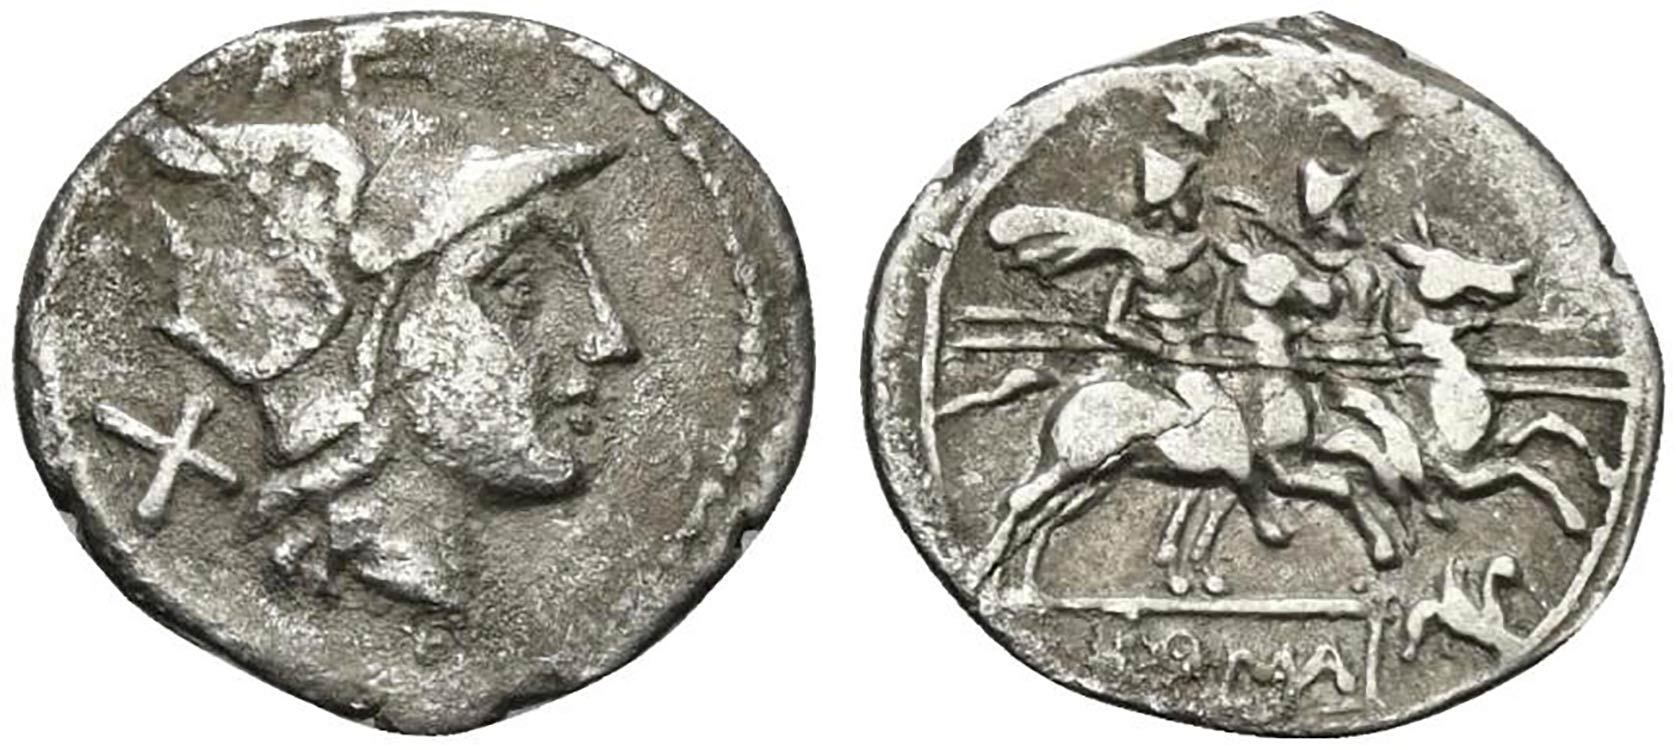 Gryphon series, Rome, 169-158 BC. ... 